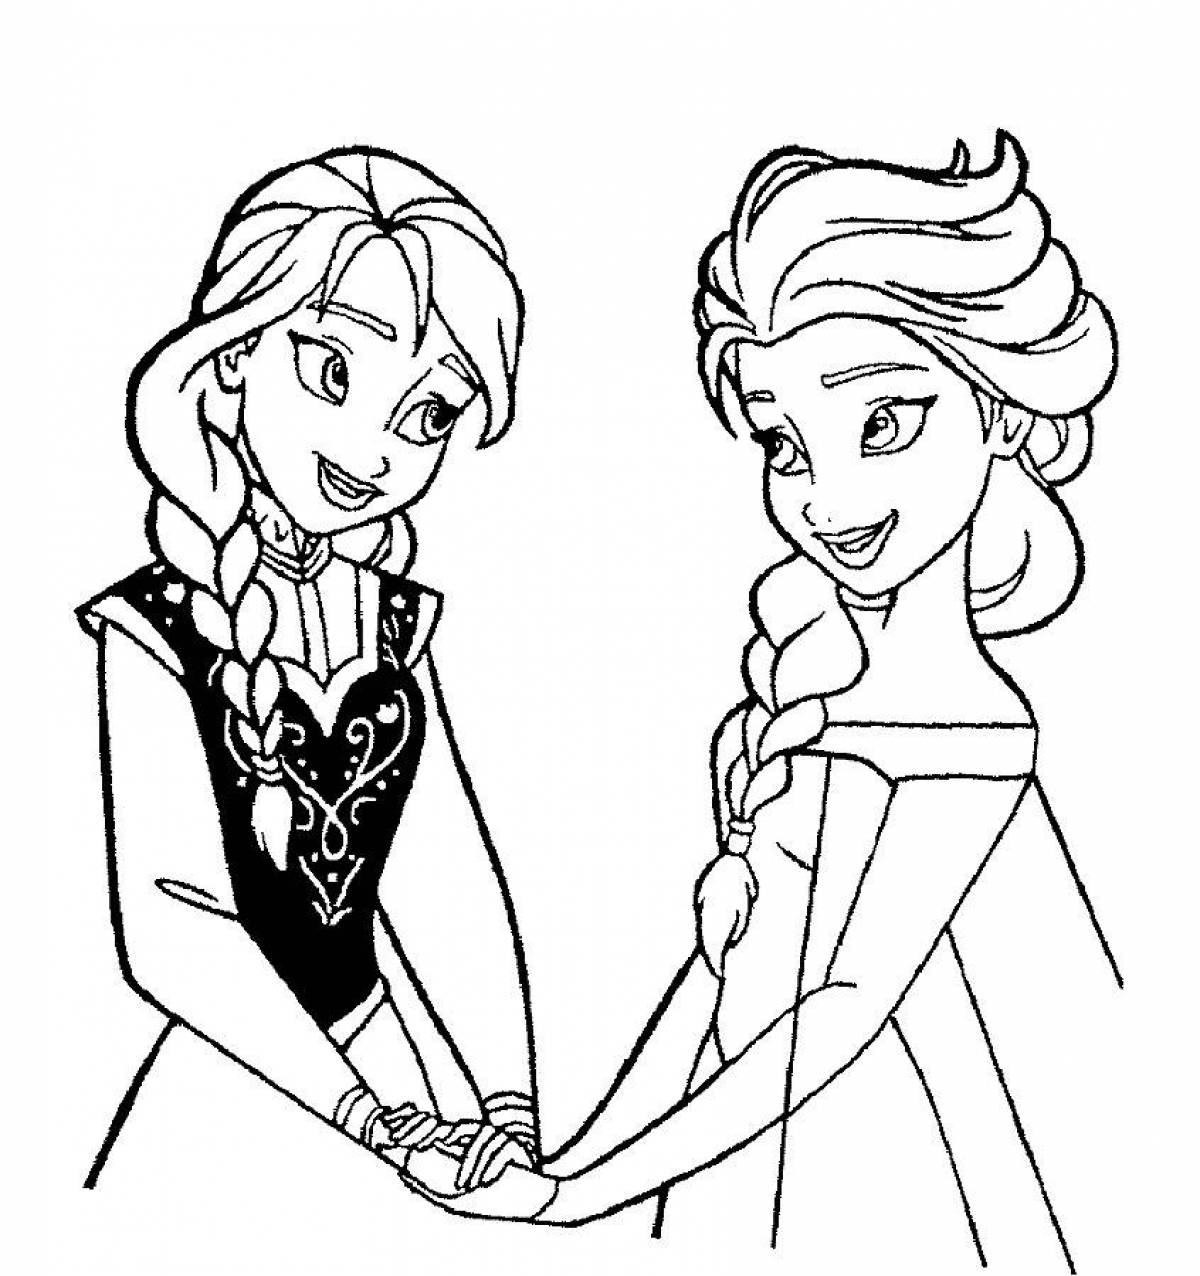 Adorable Elsa coloring book for kids